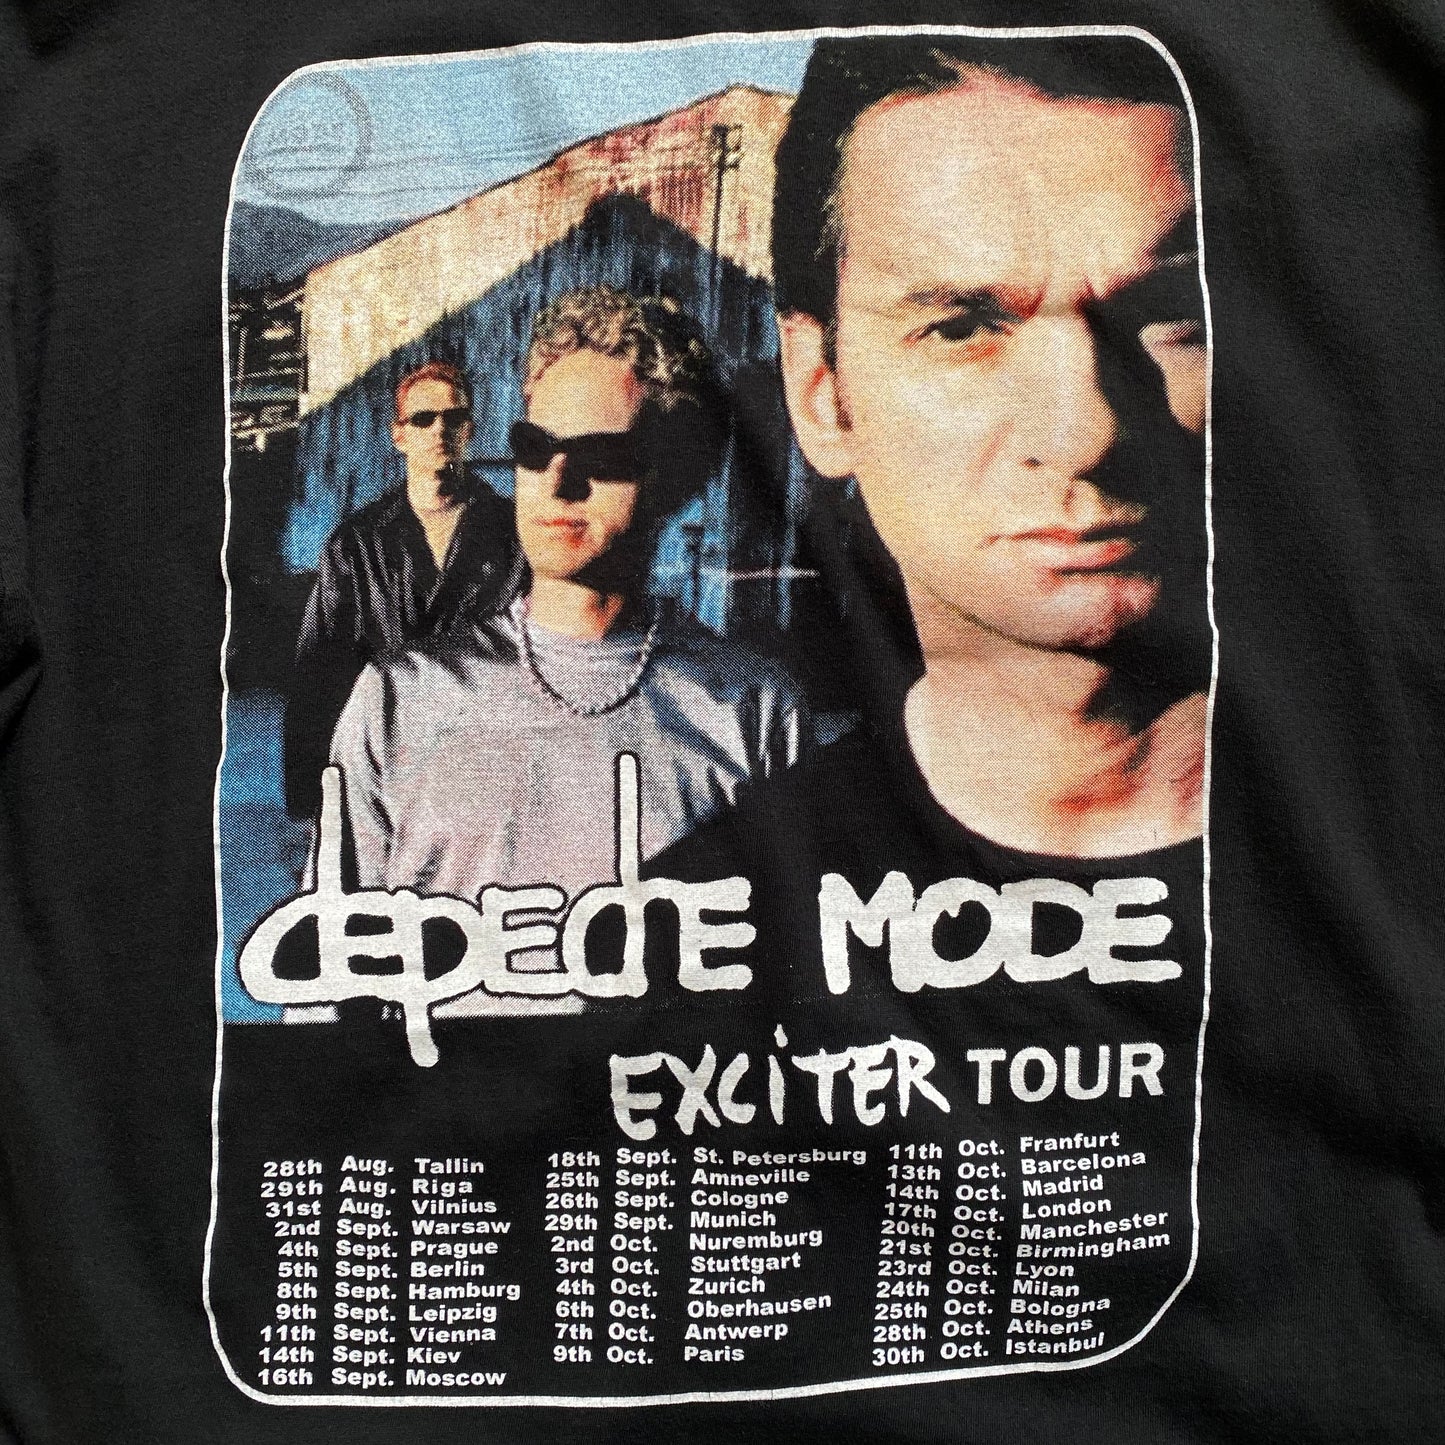 00's depeche MODE "EXCITER TOUR" T-SHIRT